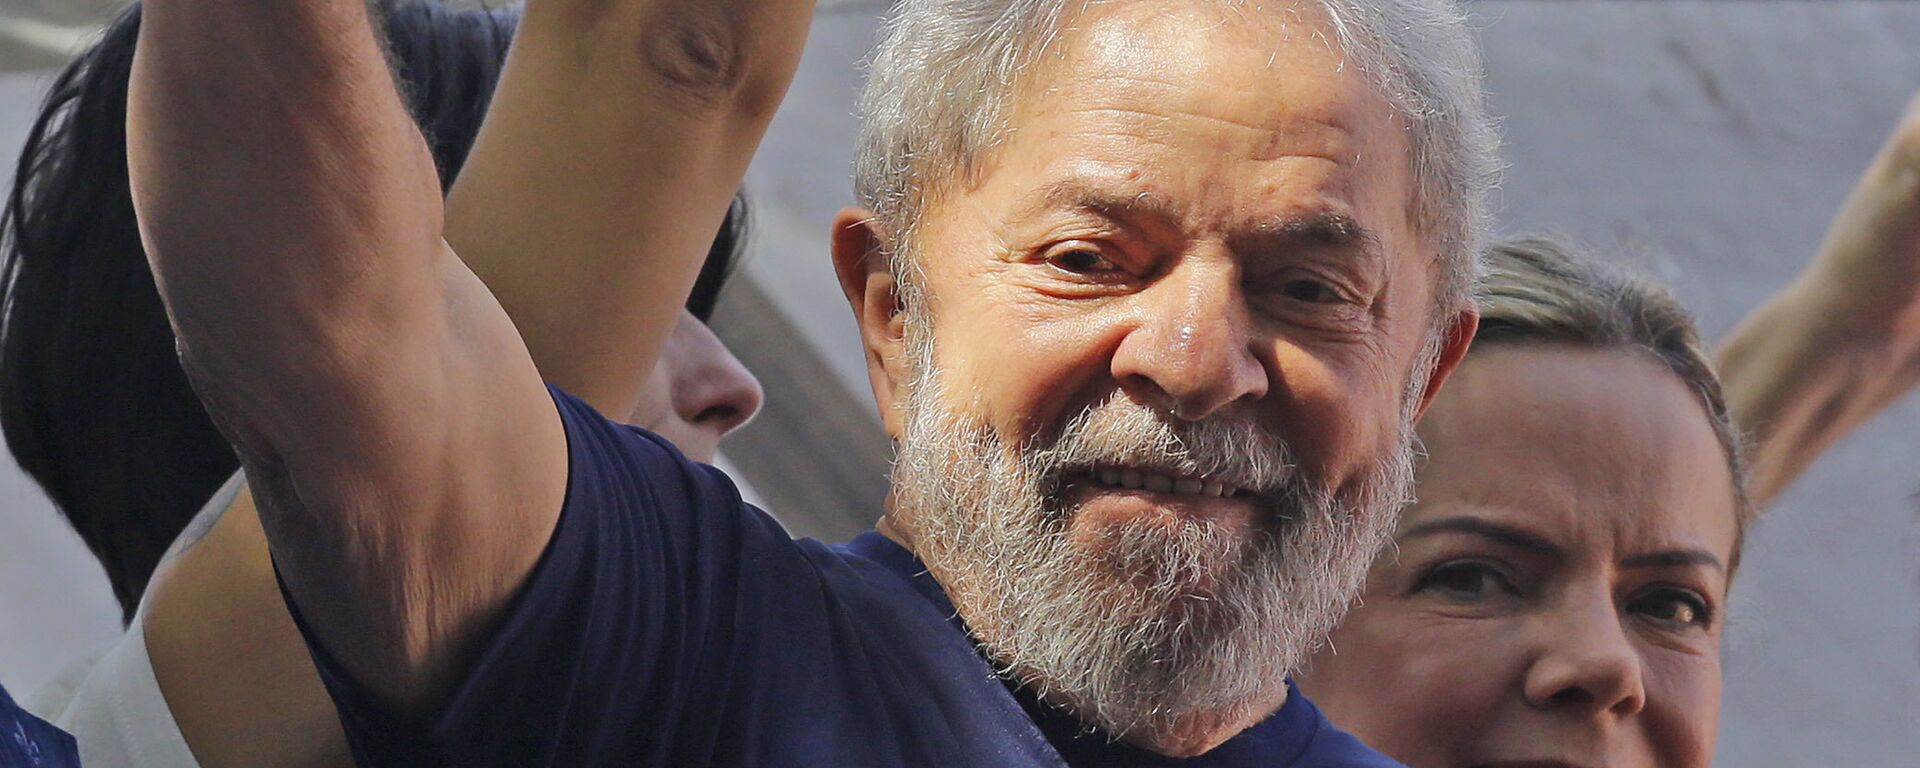 Luiz Inácio Lula da Silva, expresidente de Brasil  - Sputnik Mundo, 1920, 04.10.2021